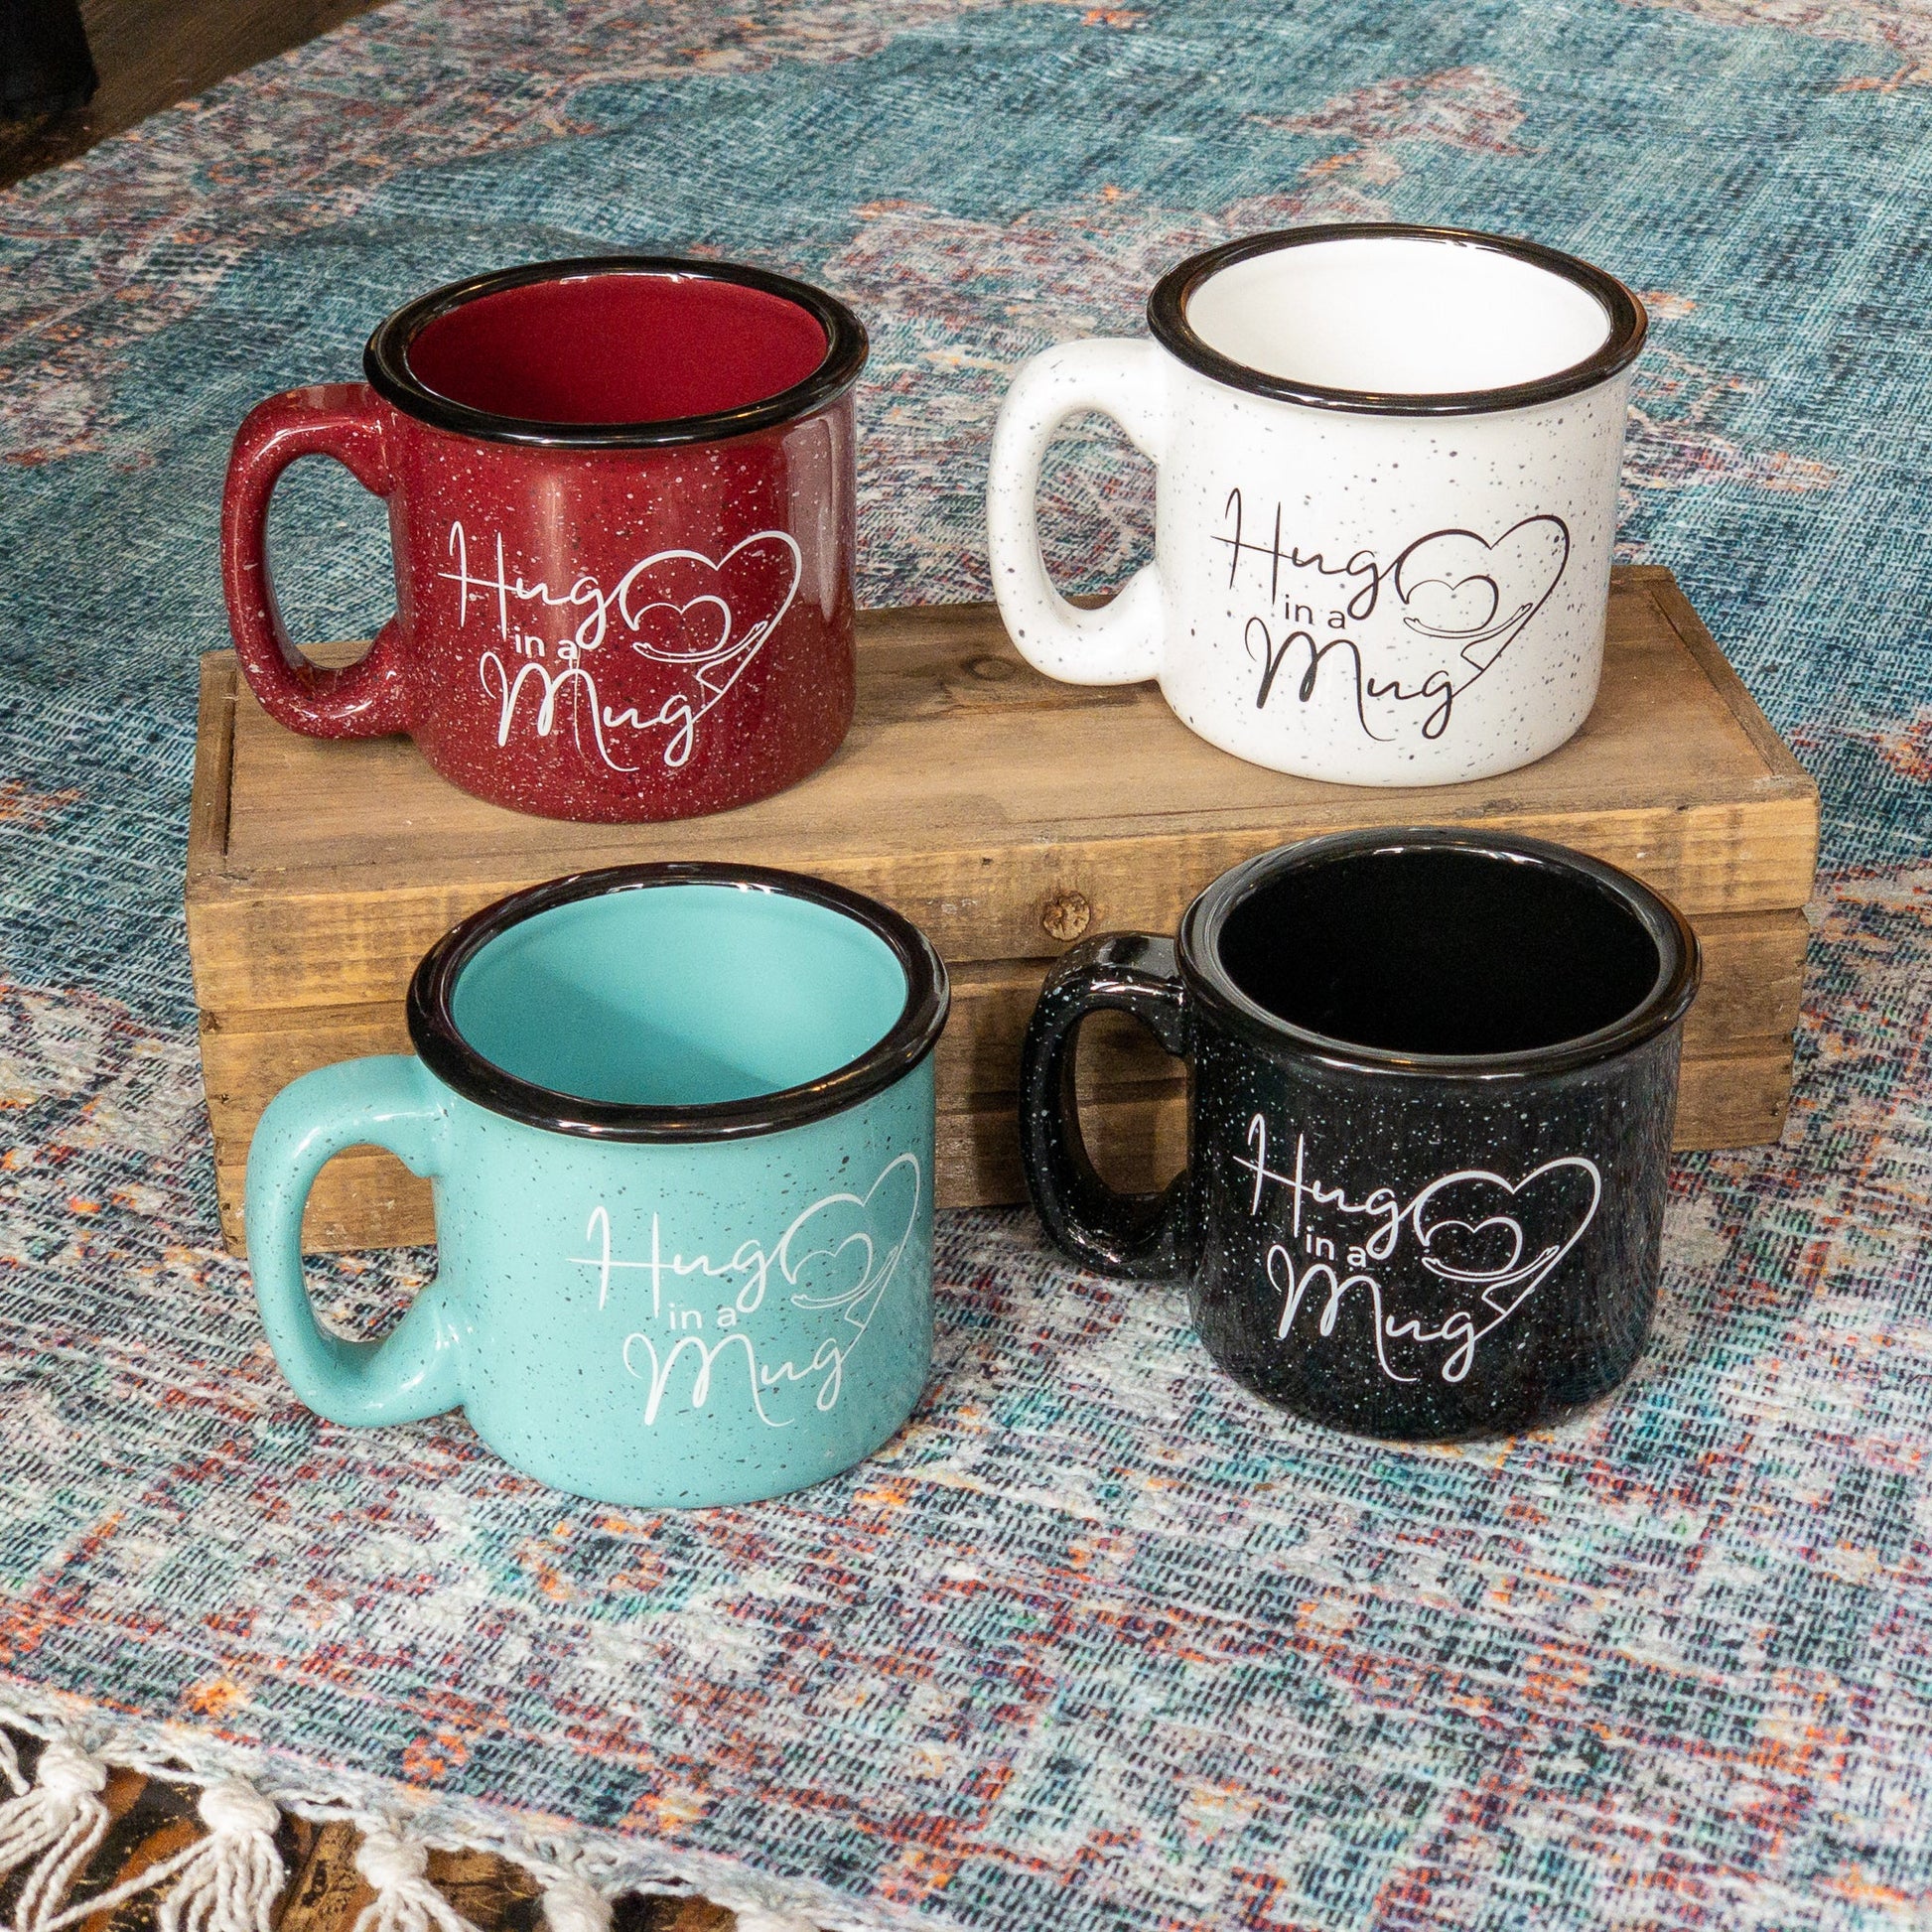 16 oz cayman mugs, Customized Ceramic Mugs, Custom Coffee Mugs